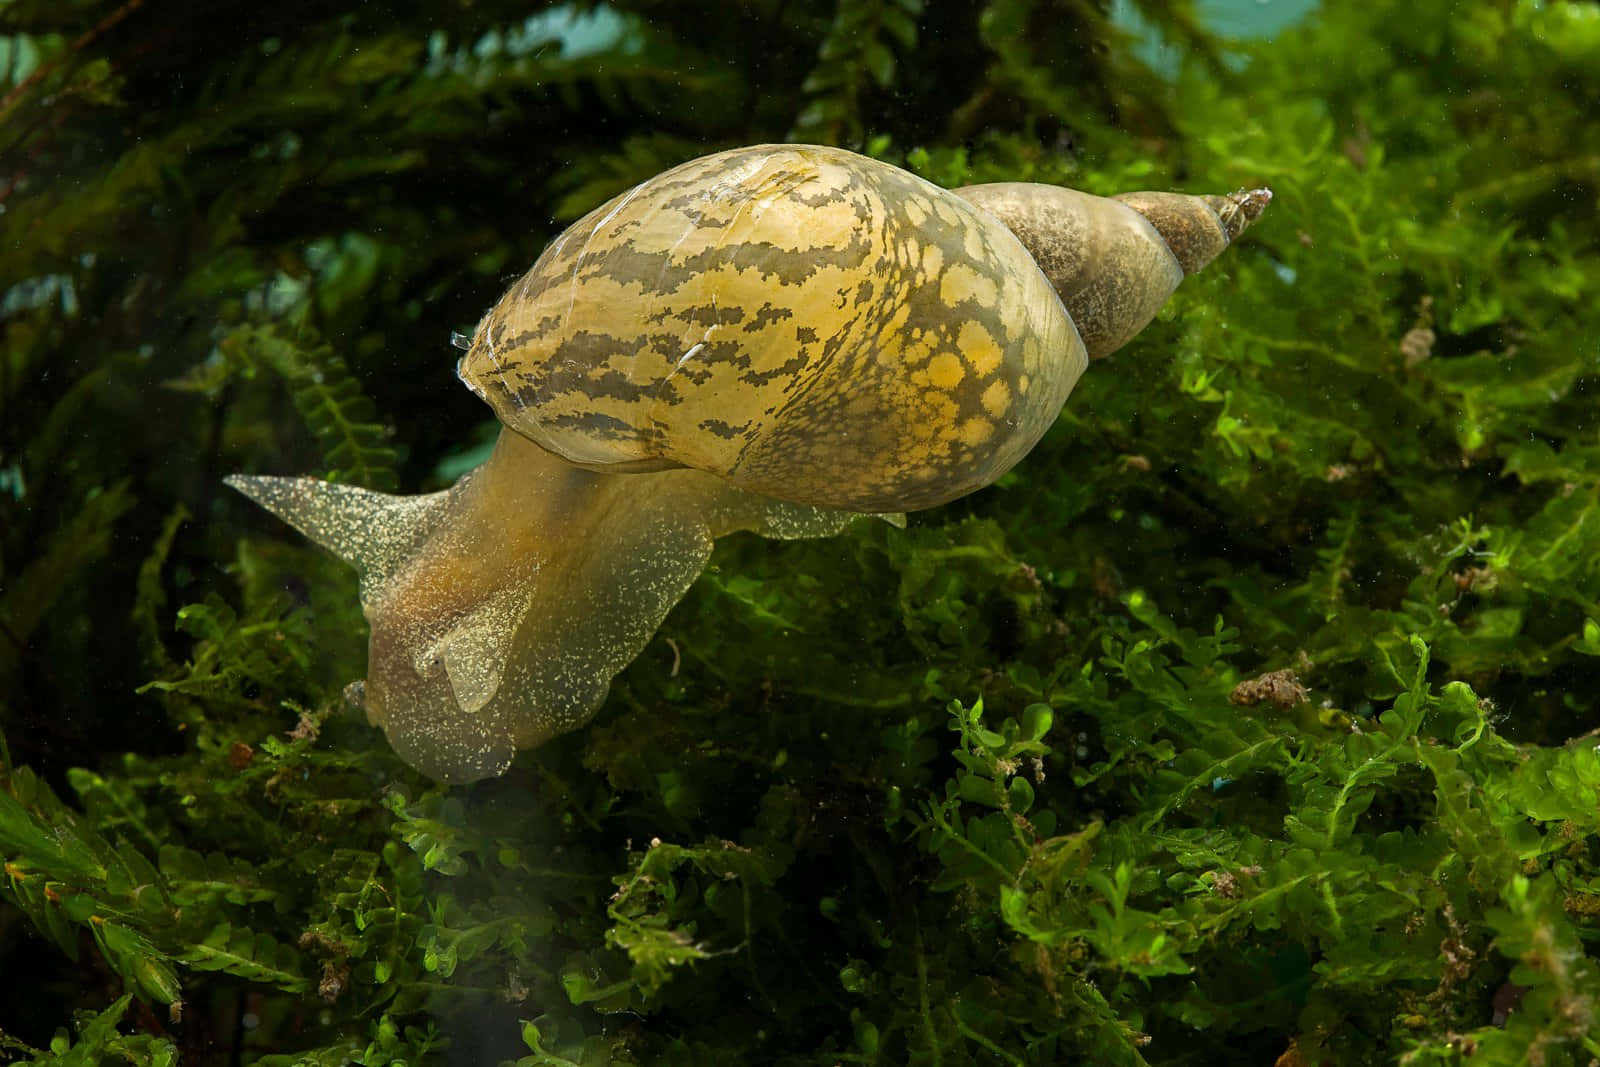 A Snail Taking a Lazy Summer Stroll